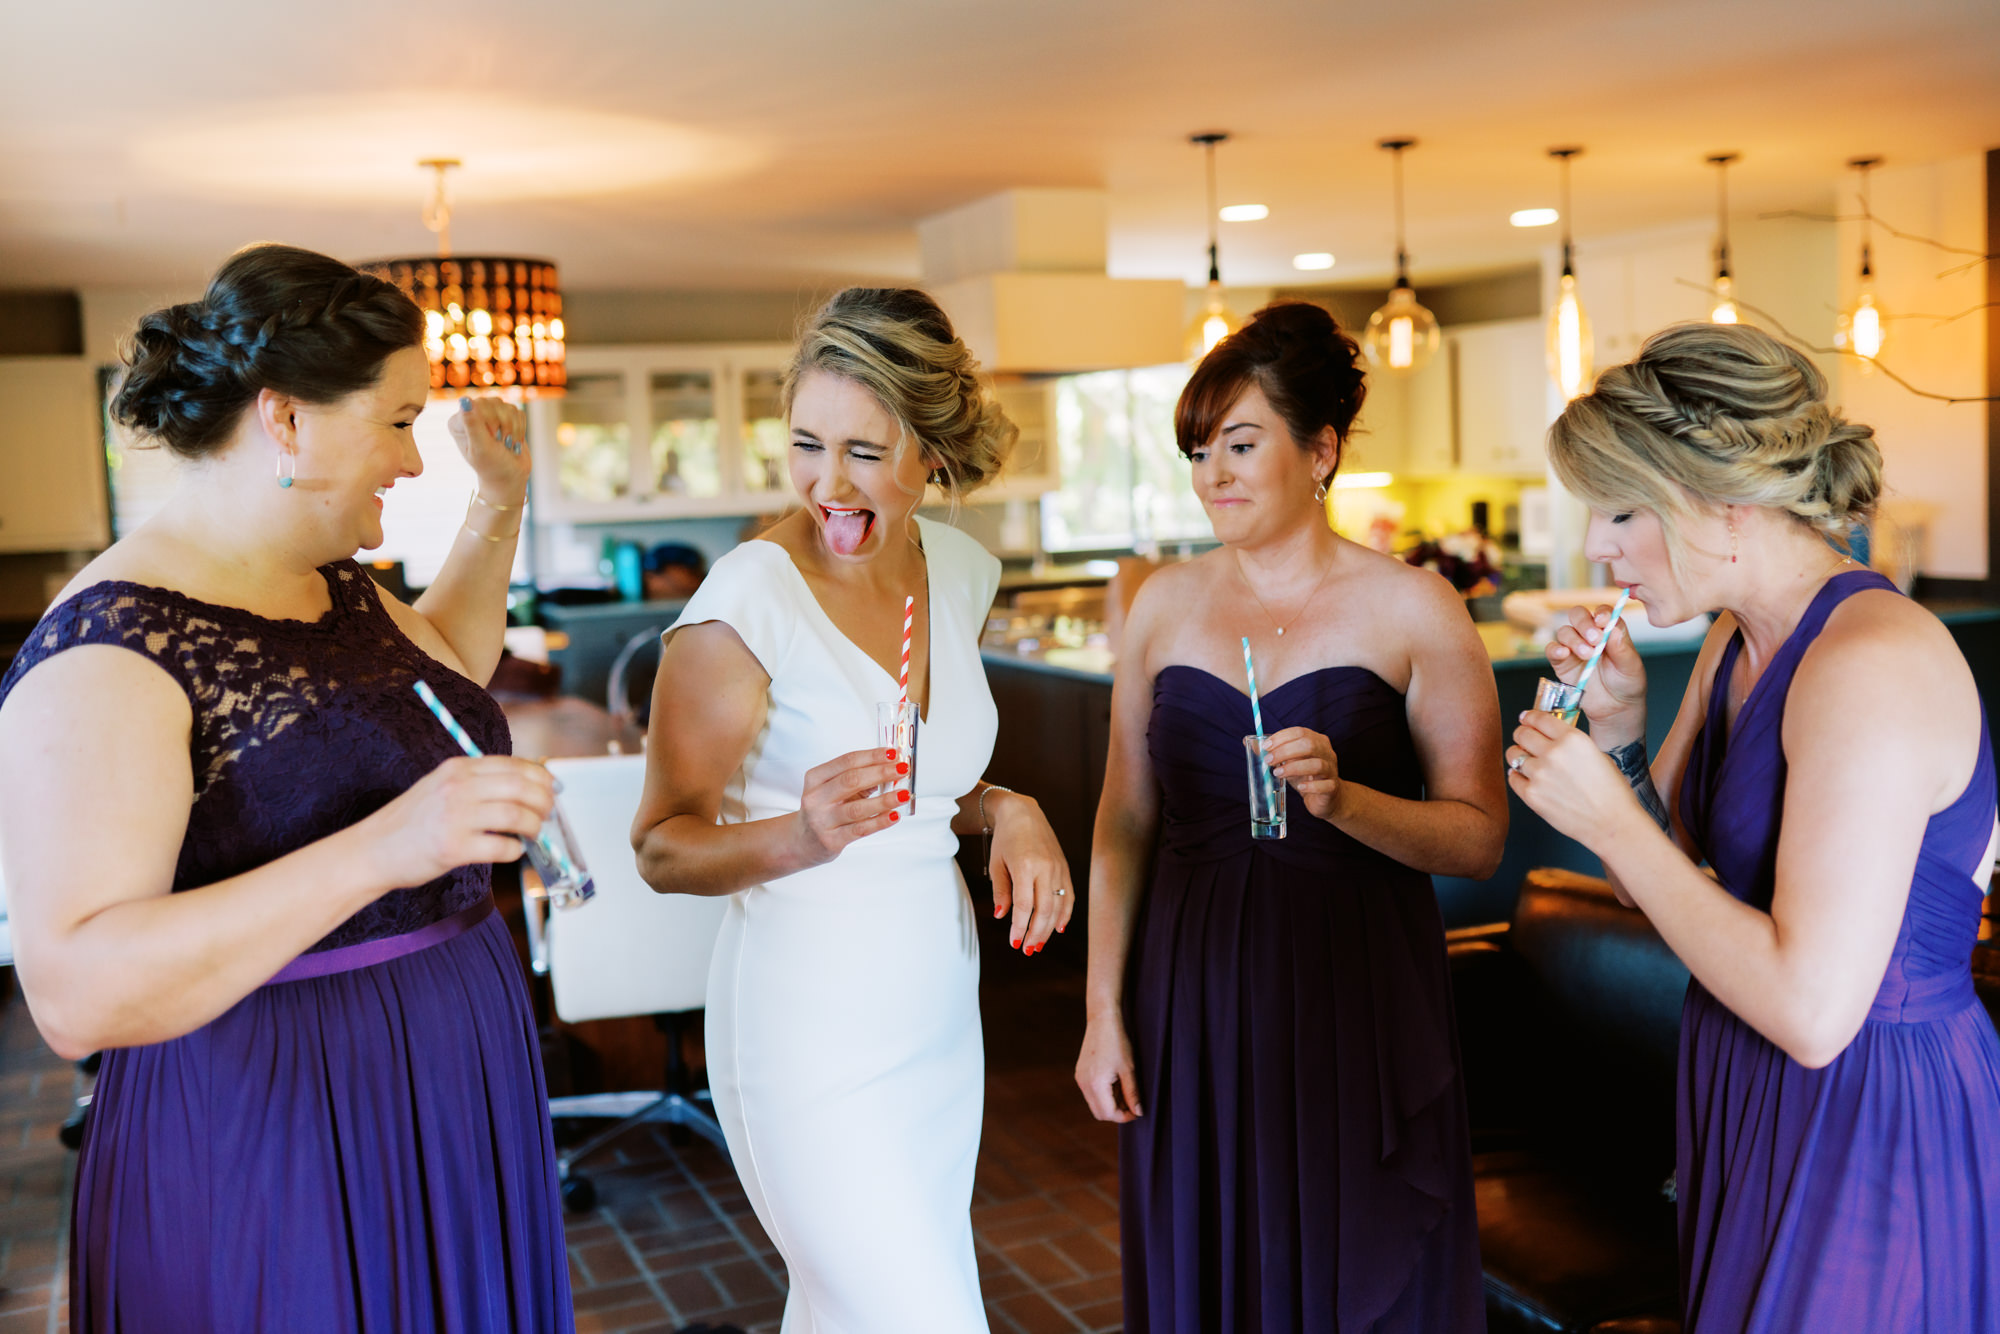 Seattle wedding photographer Jenn Tai: Kayley has a drink with her bridesmaids